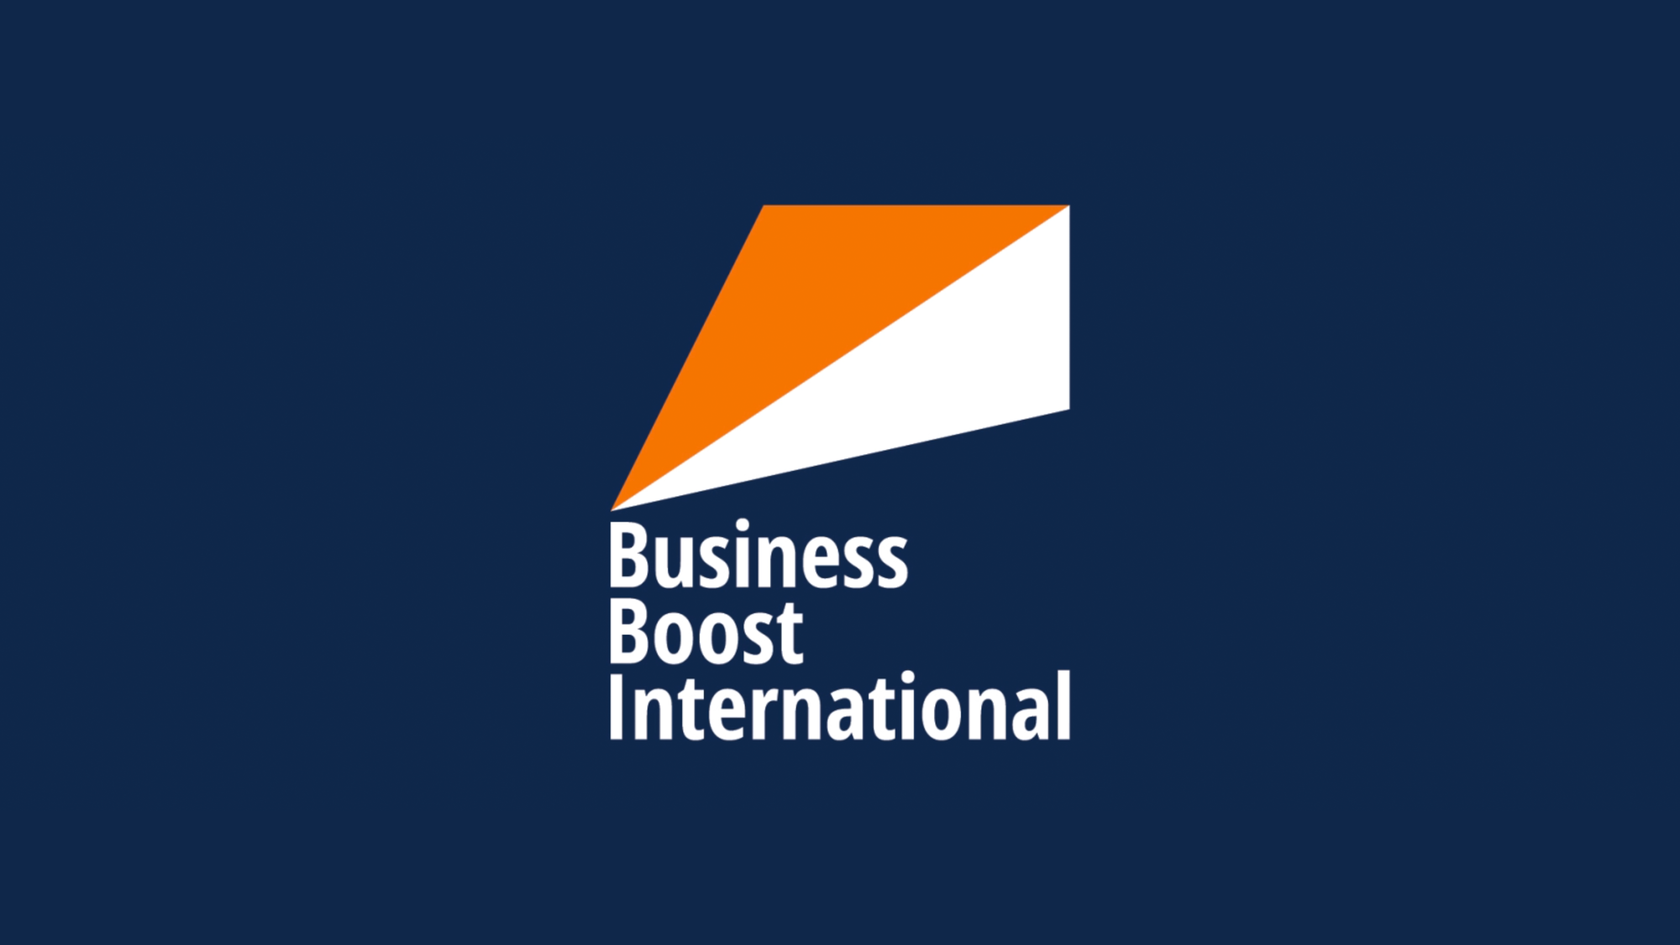 Business International